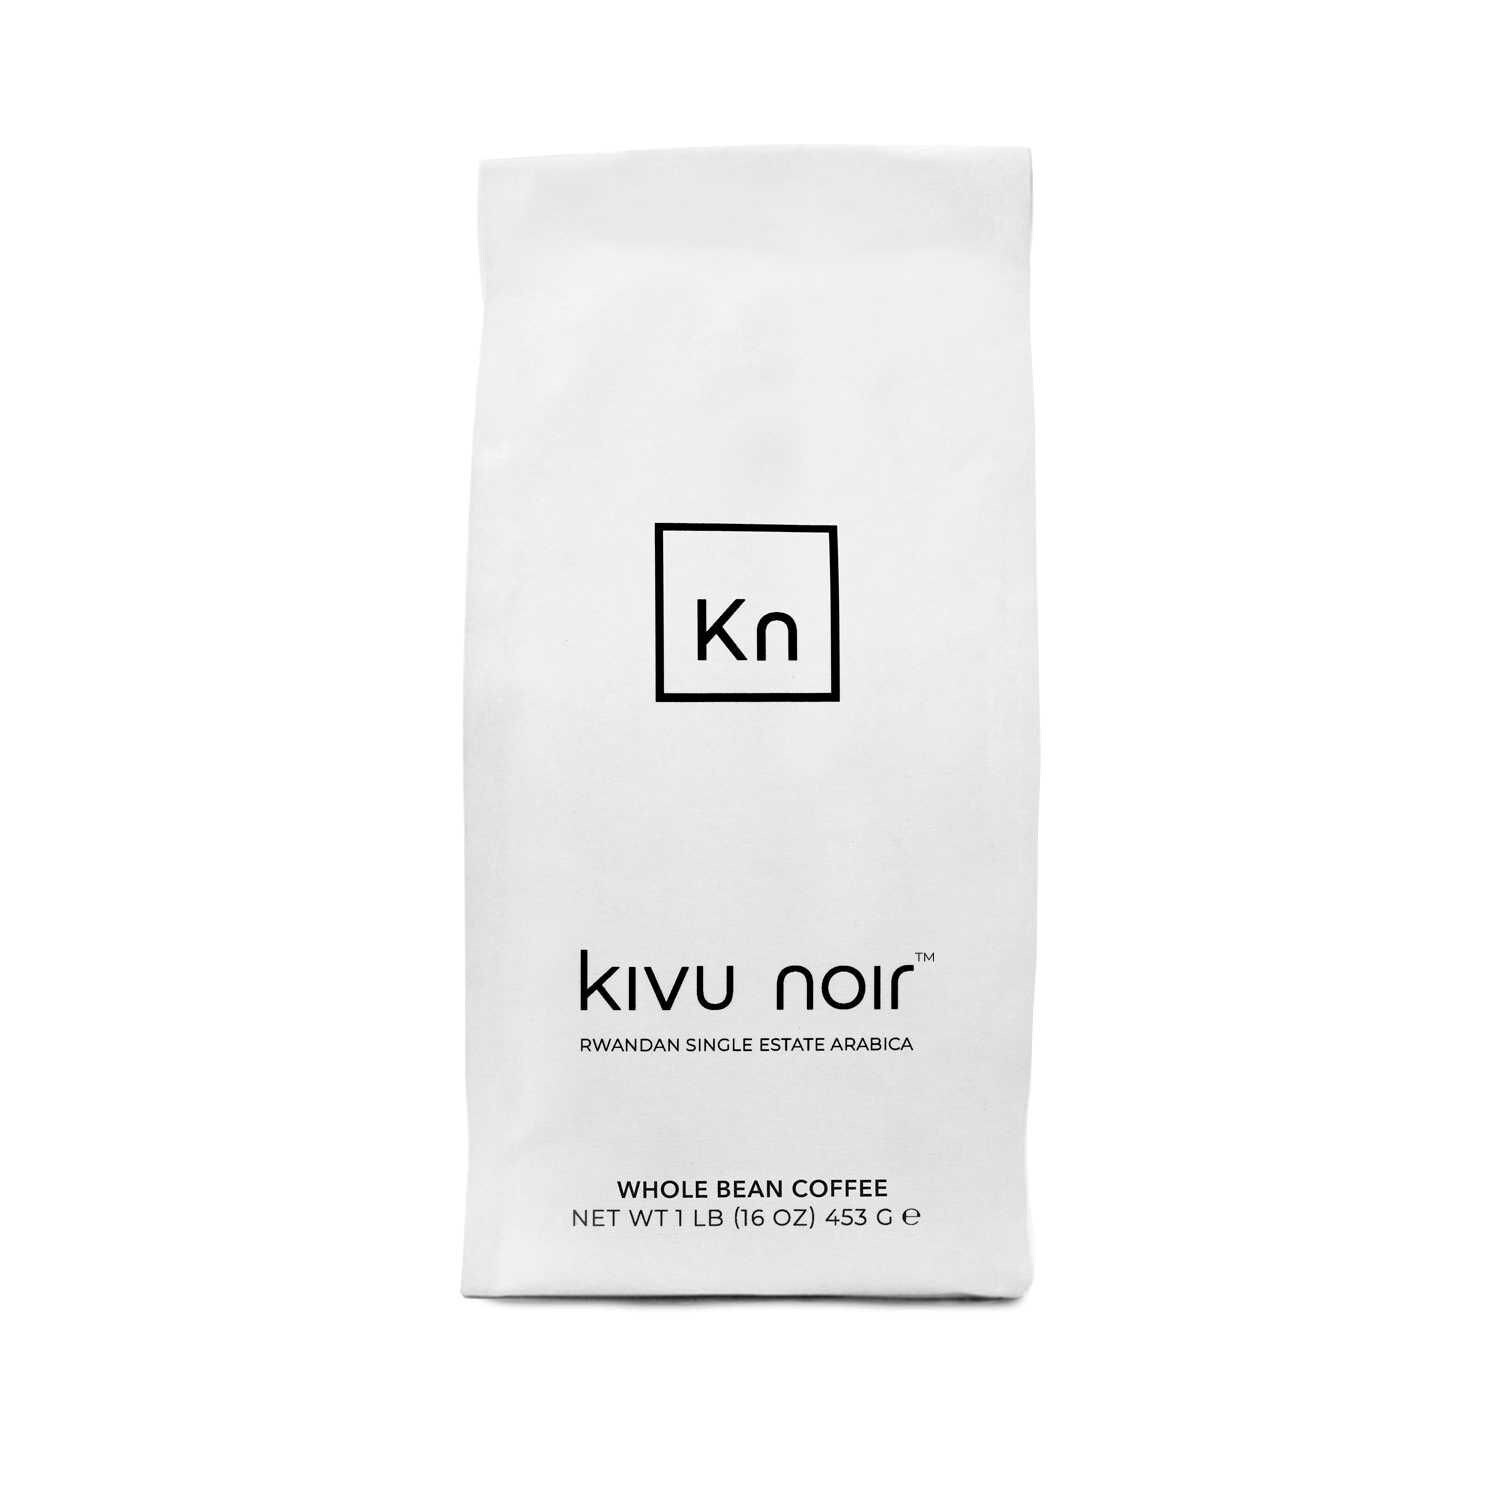 Kivu Noir Rwandan Single Estate Arabica Whole Bean Coffee, 453g